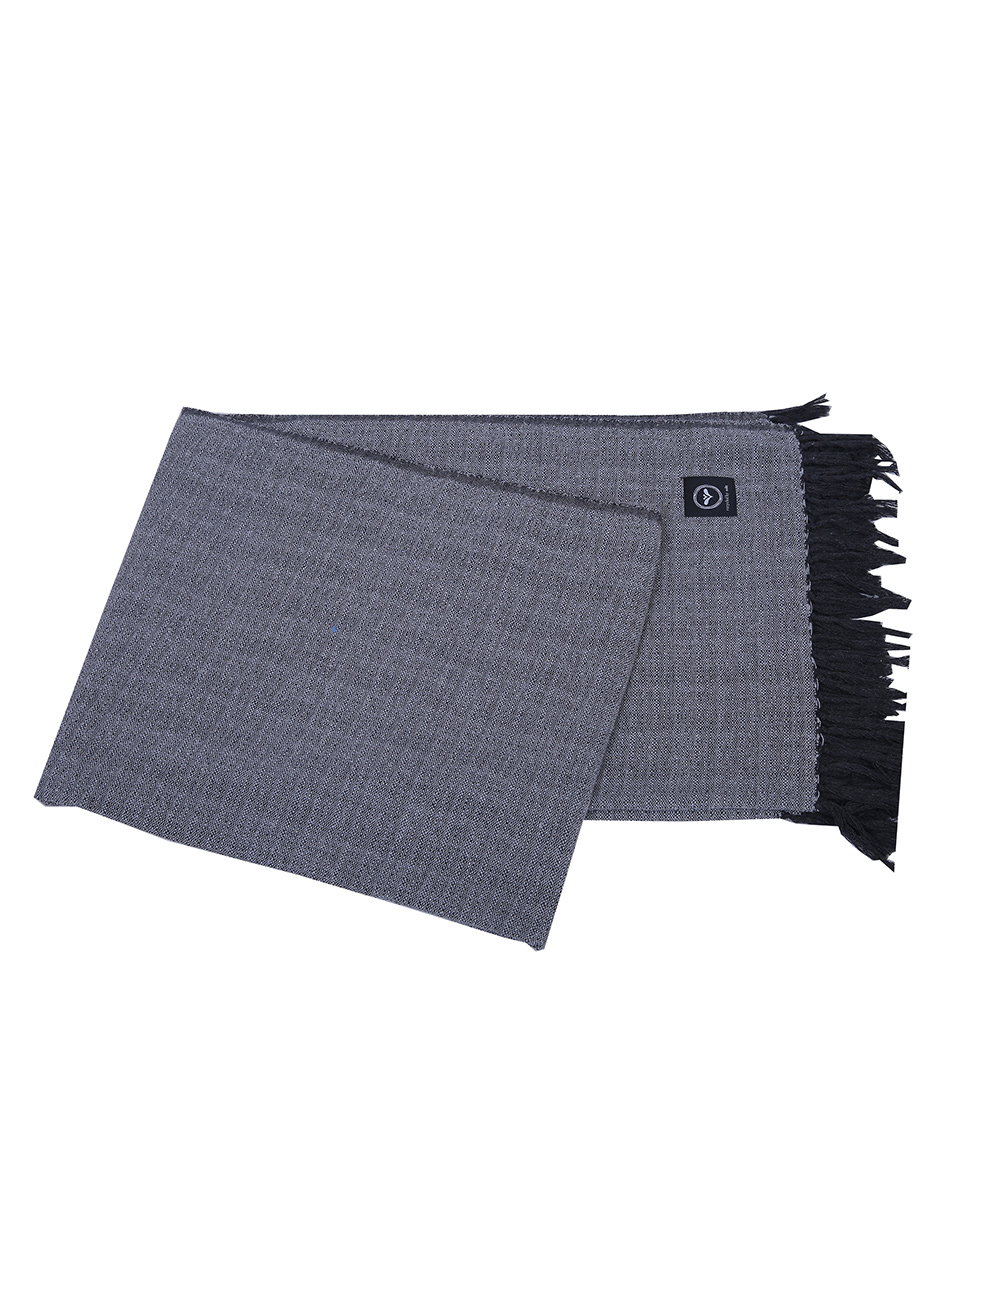 Blanket Saga Black/Gray 130x170cm